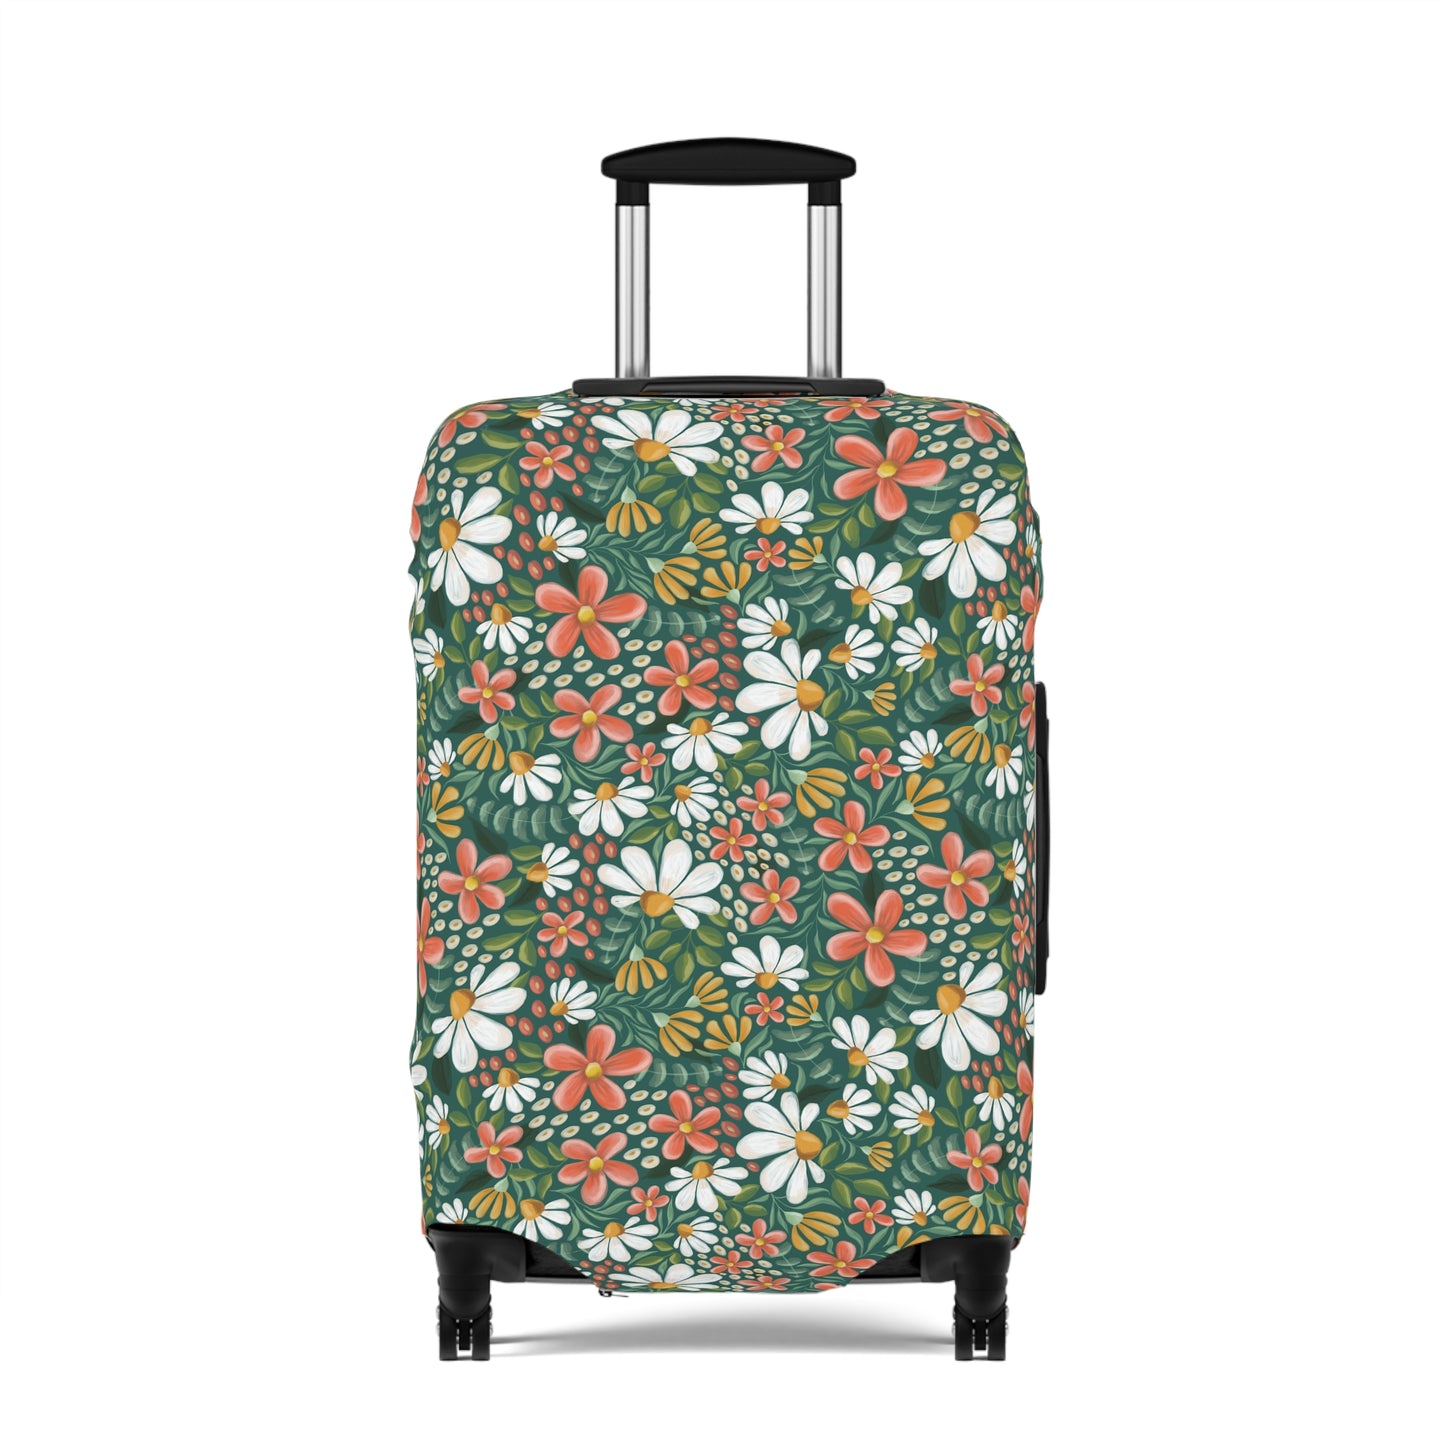 Cosmo Petals - Luggage Cover - howjoyfulshop